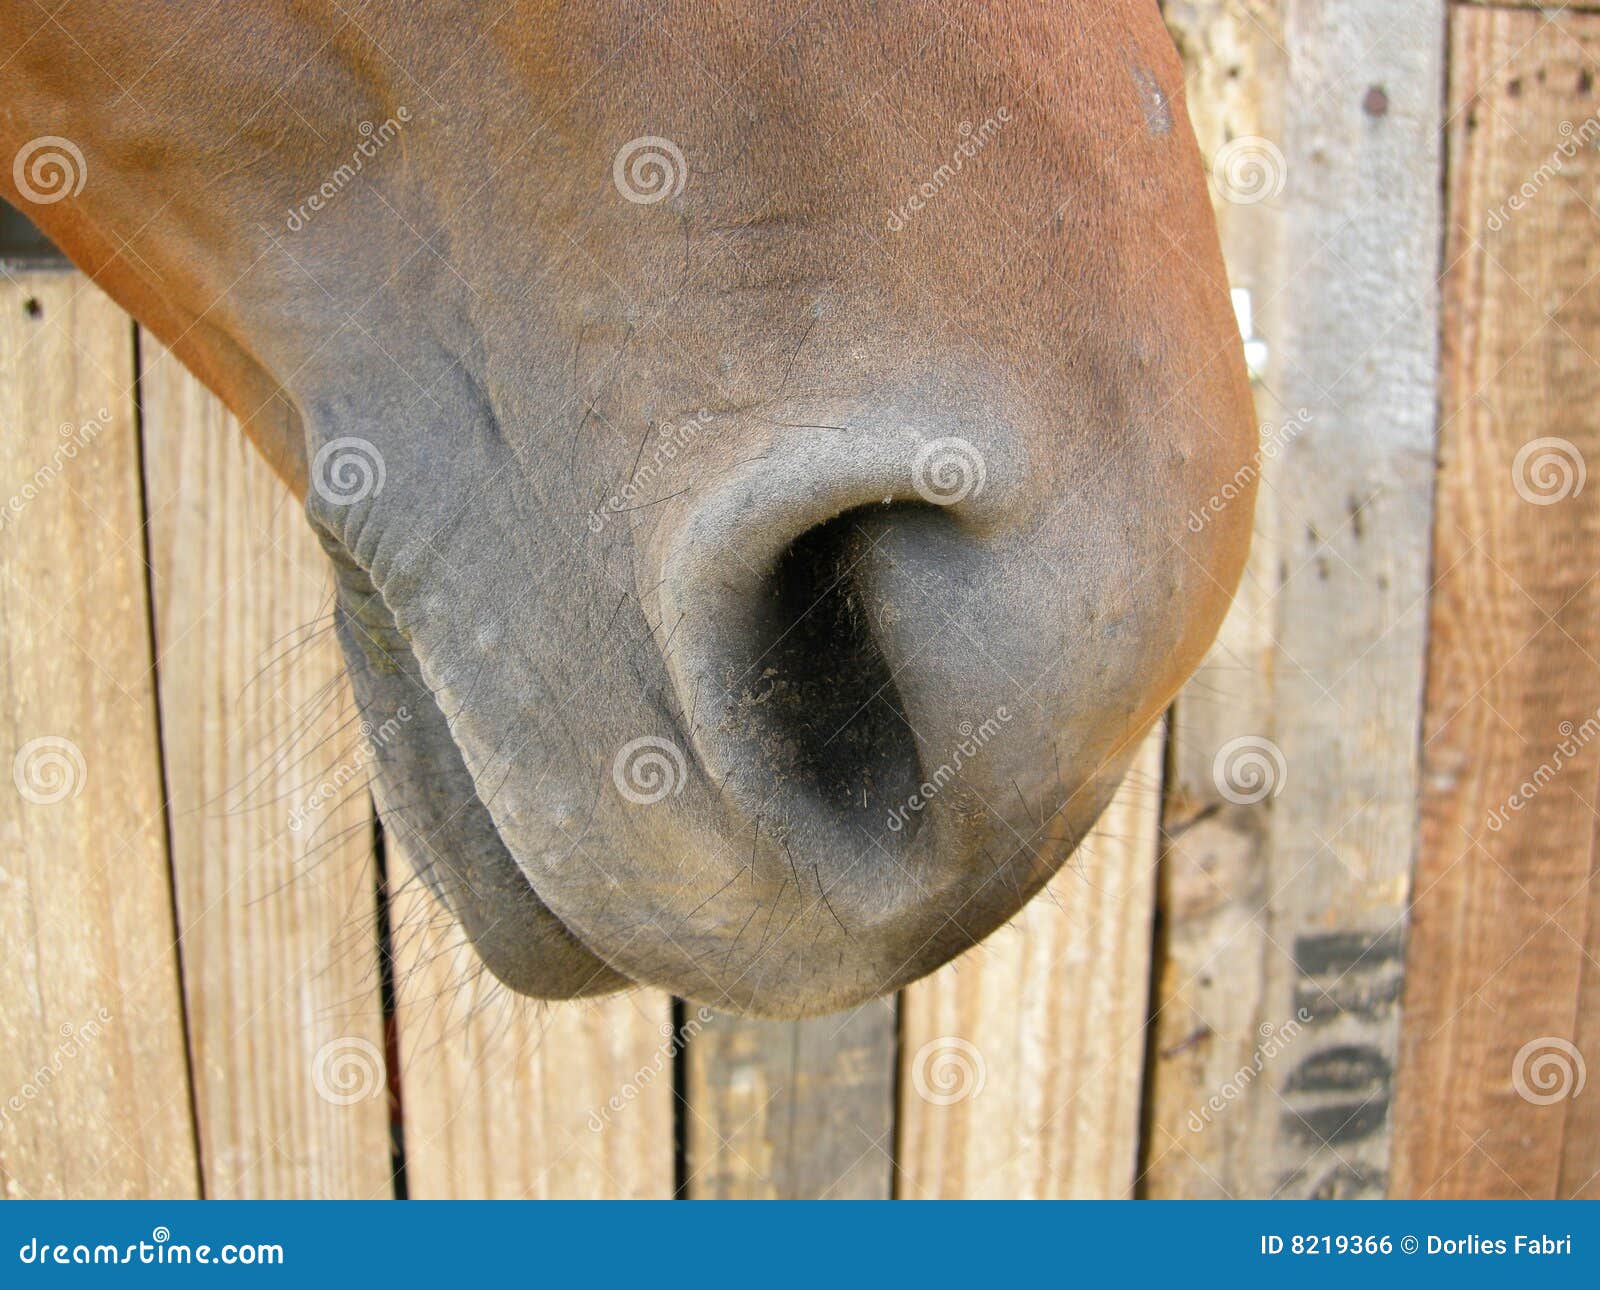 horse nostril